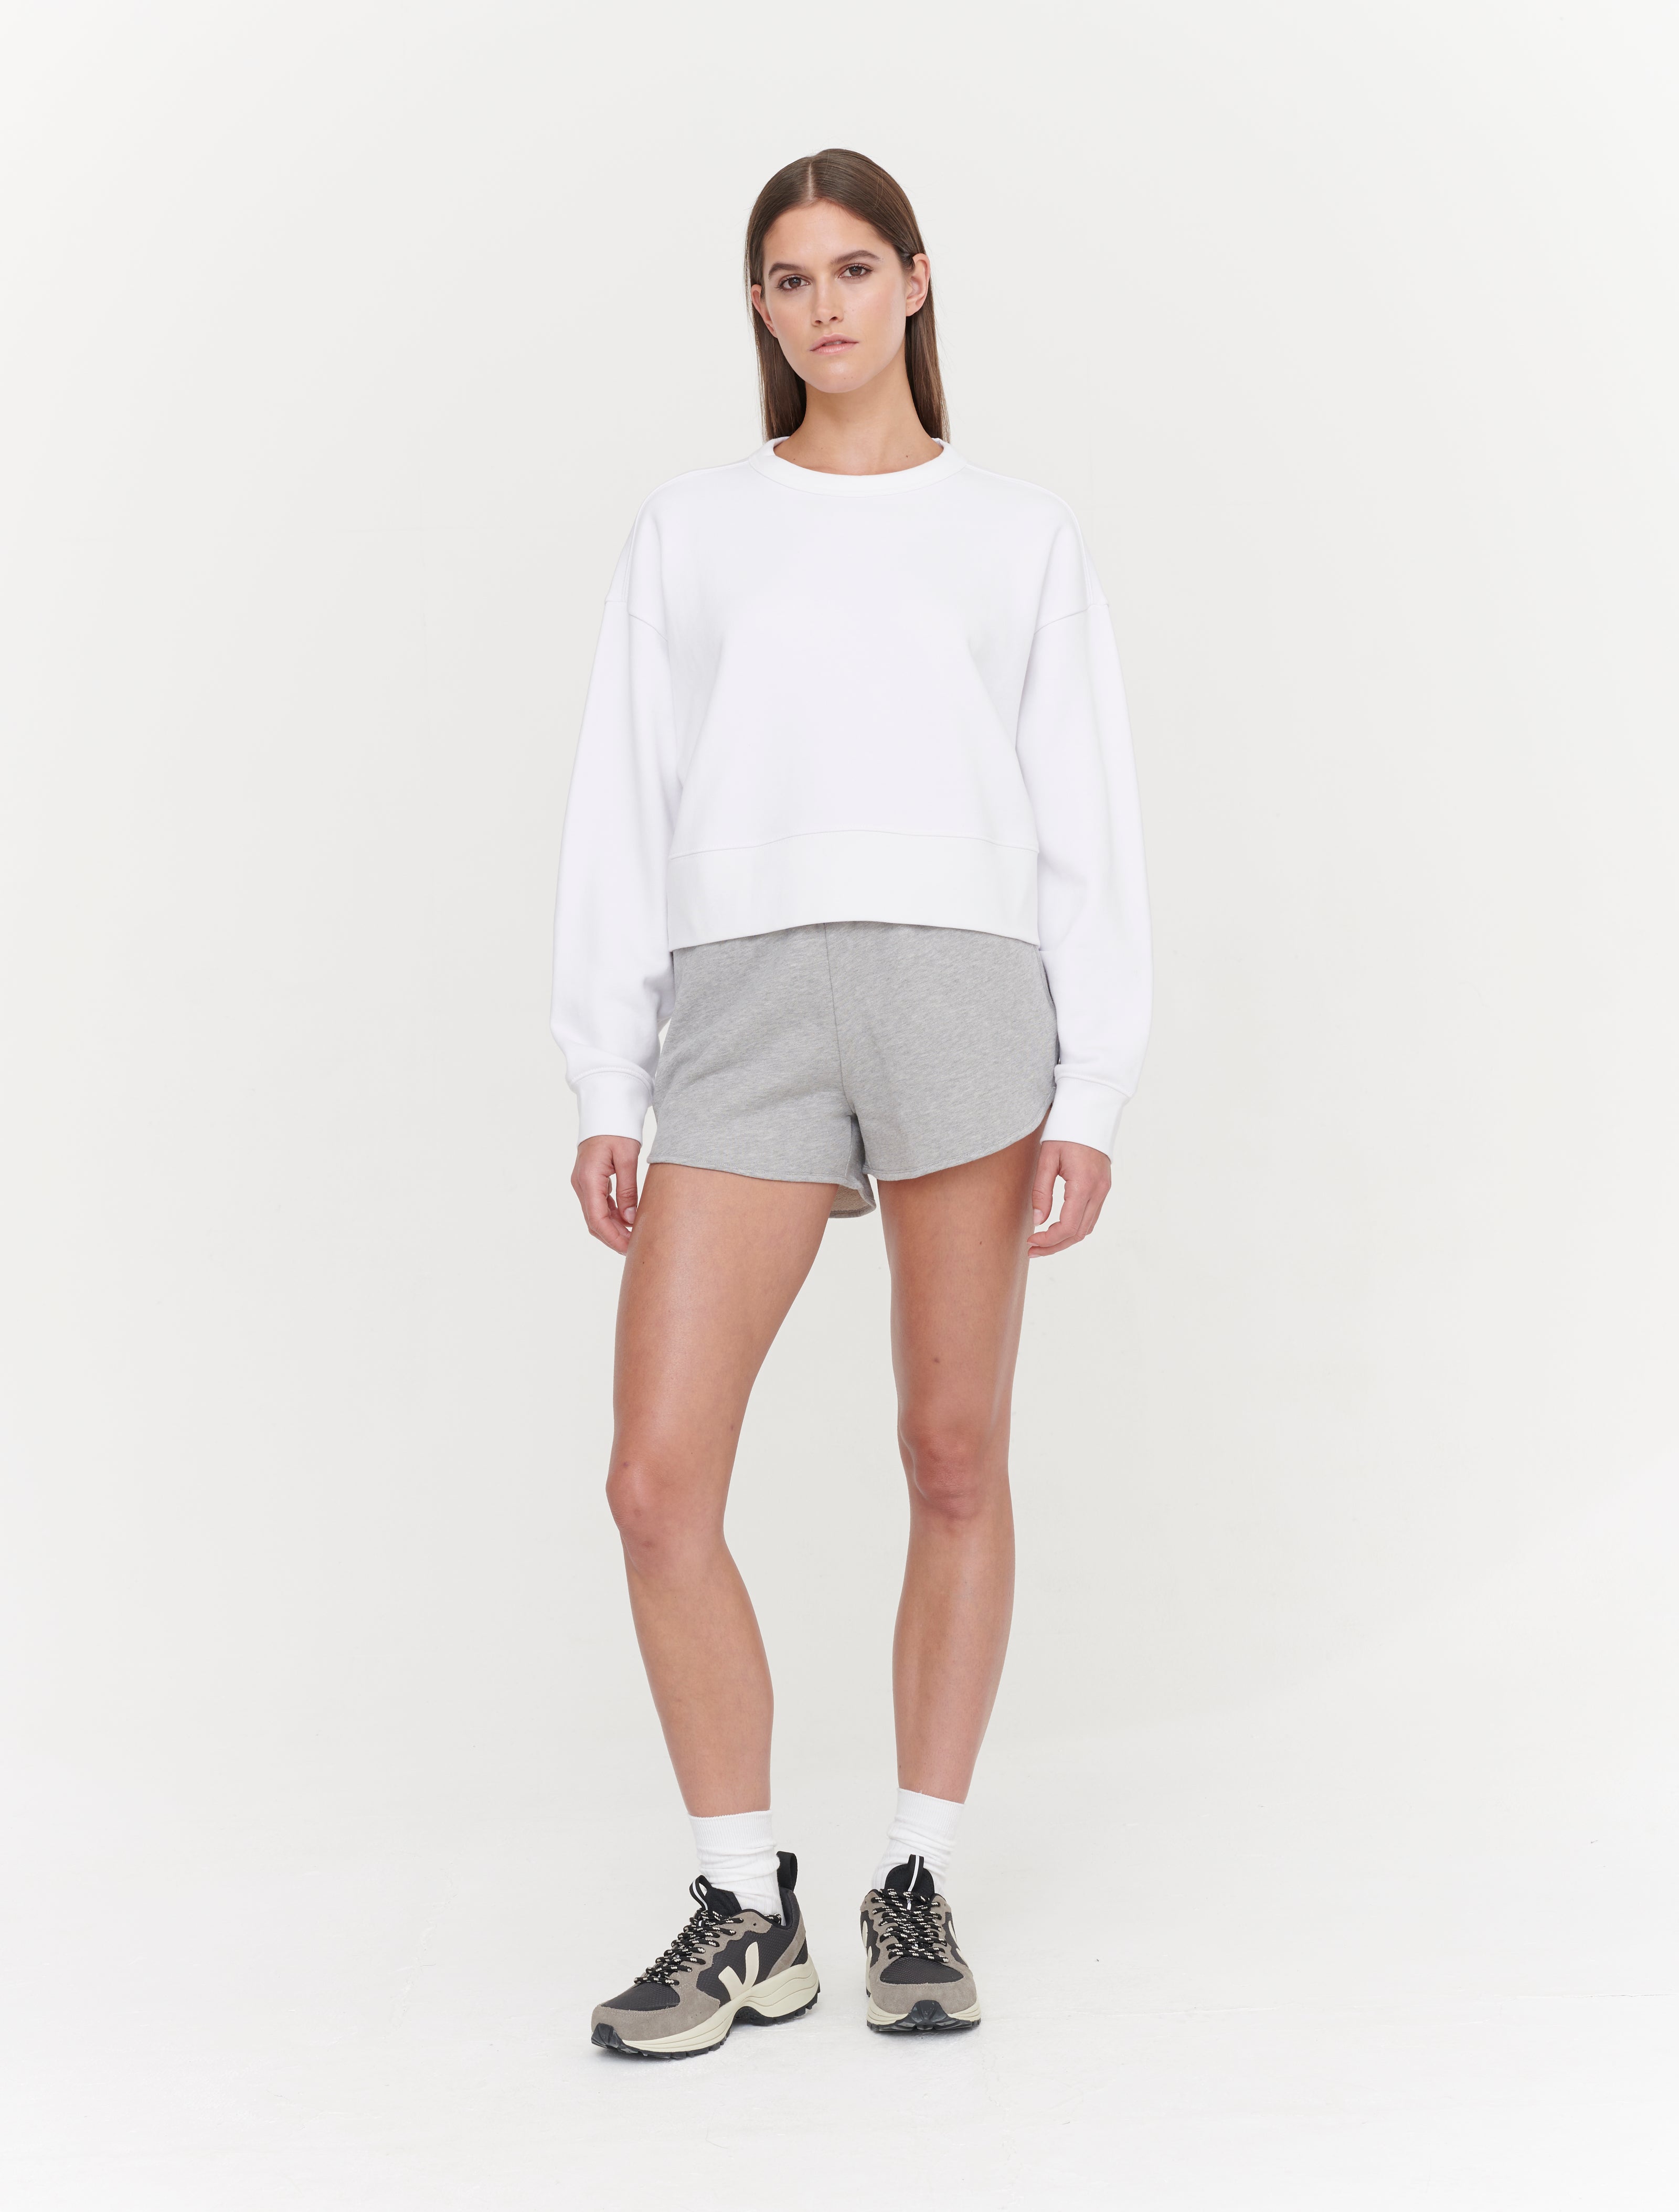 Ninety Percent Ginnie Sweatshirt in White